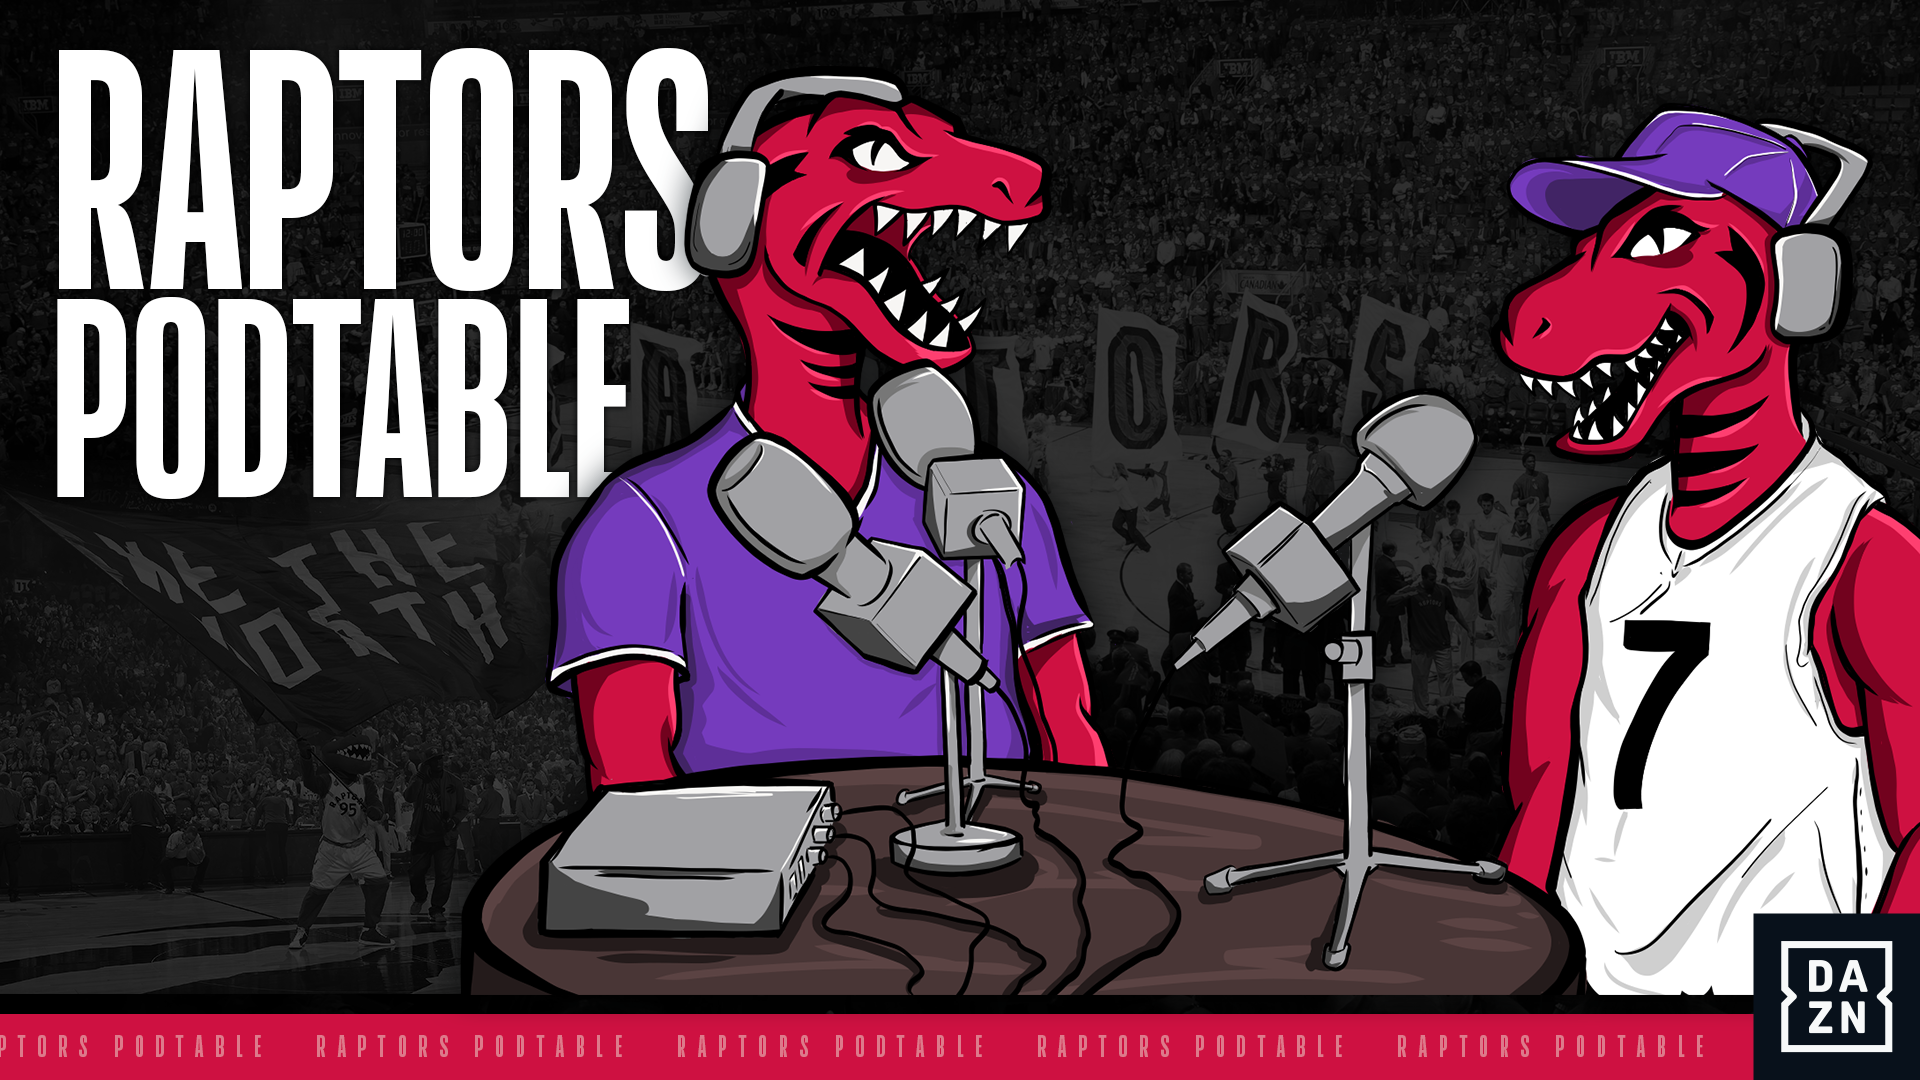 Raptors Podtable Podcast Toronto Raptors podcast presented by NBA.com